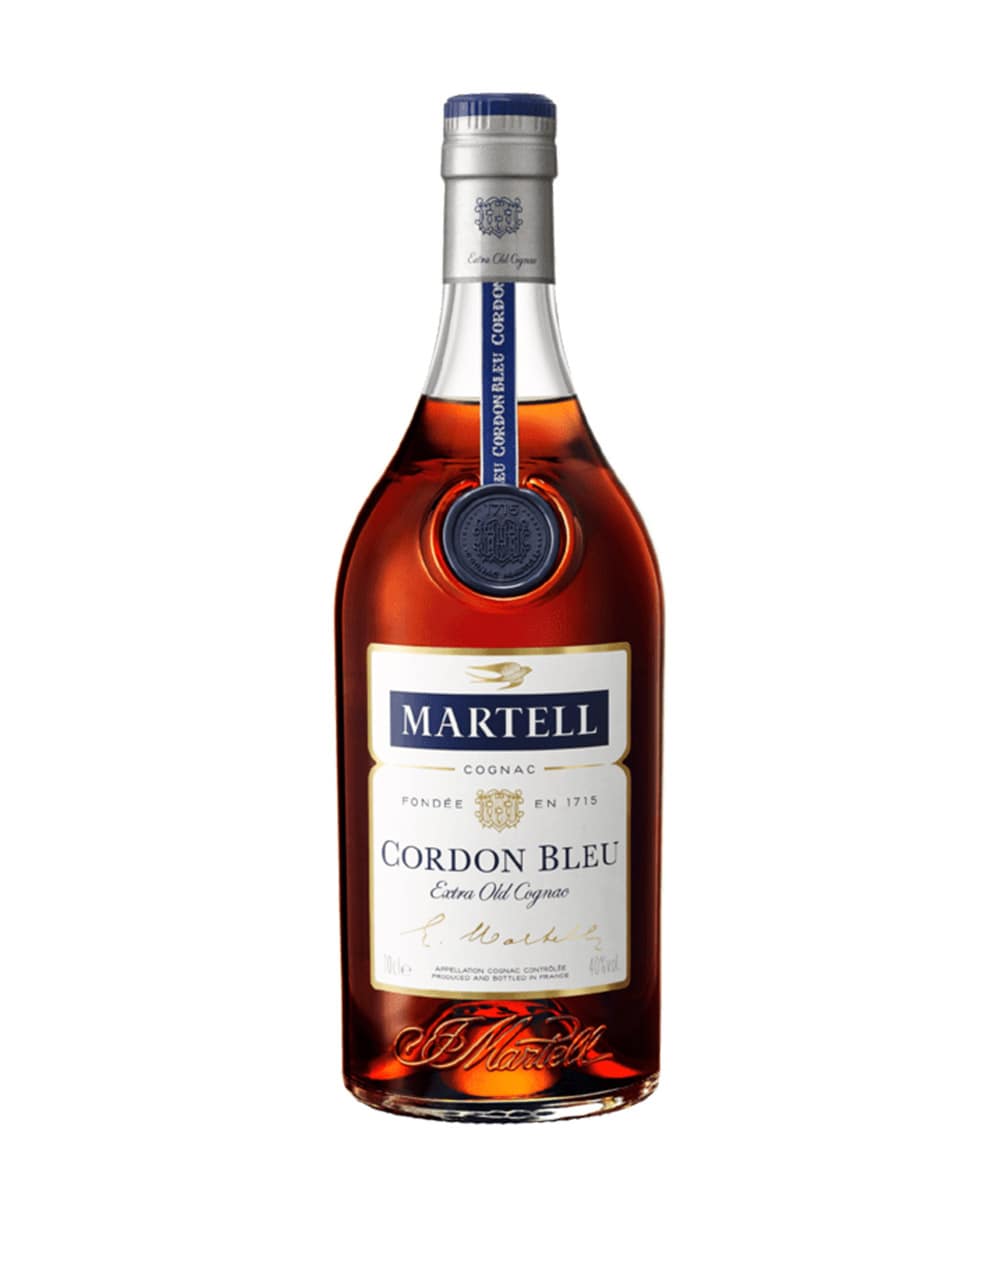 Martell Cordon Bleu extra old cognac